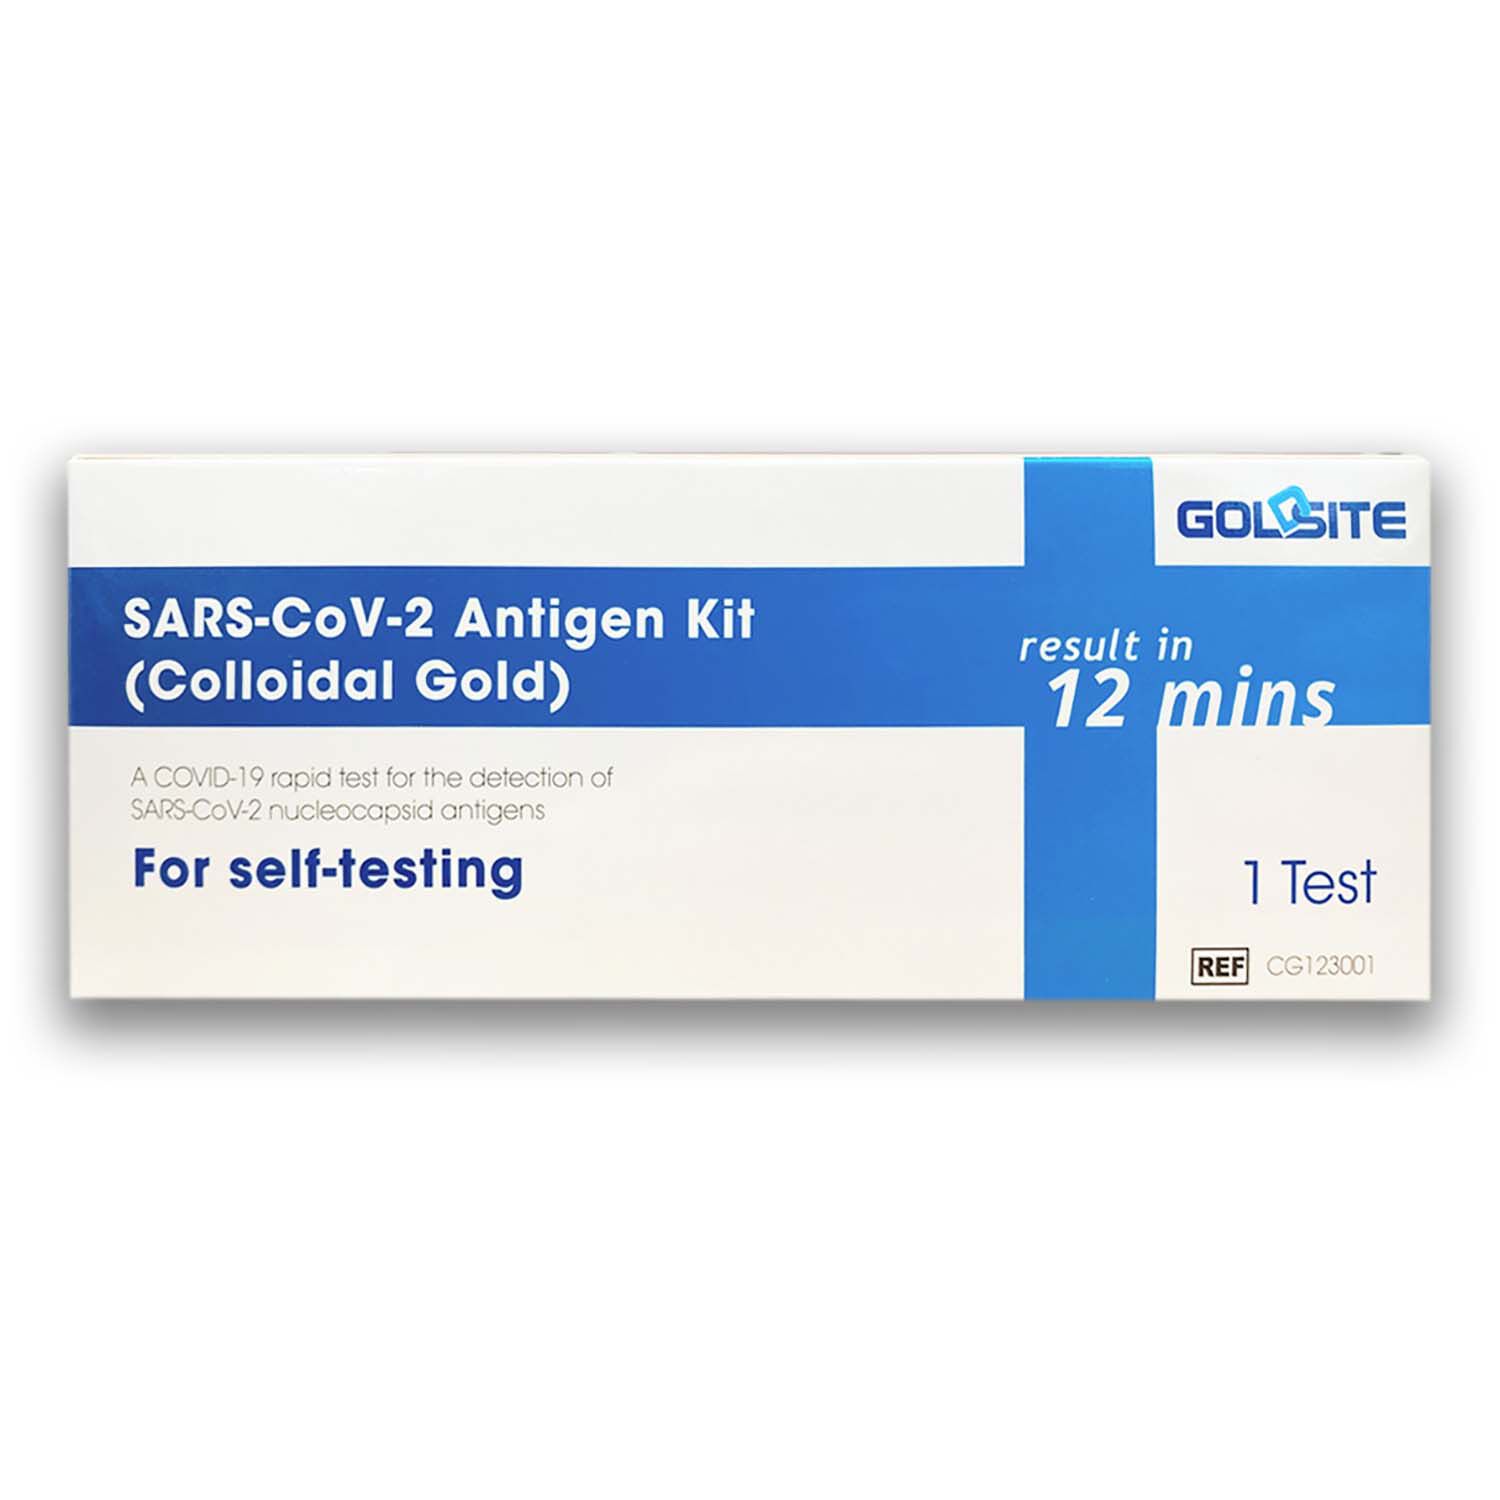 Image of Autotest Diagnostico Sars-CoV-2 Antigen Kit Goldsite 1 Test